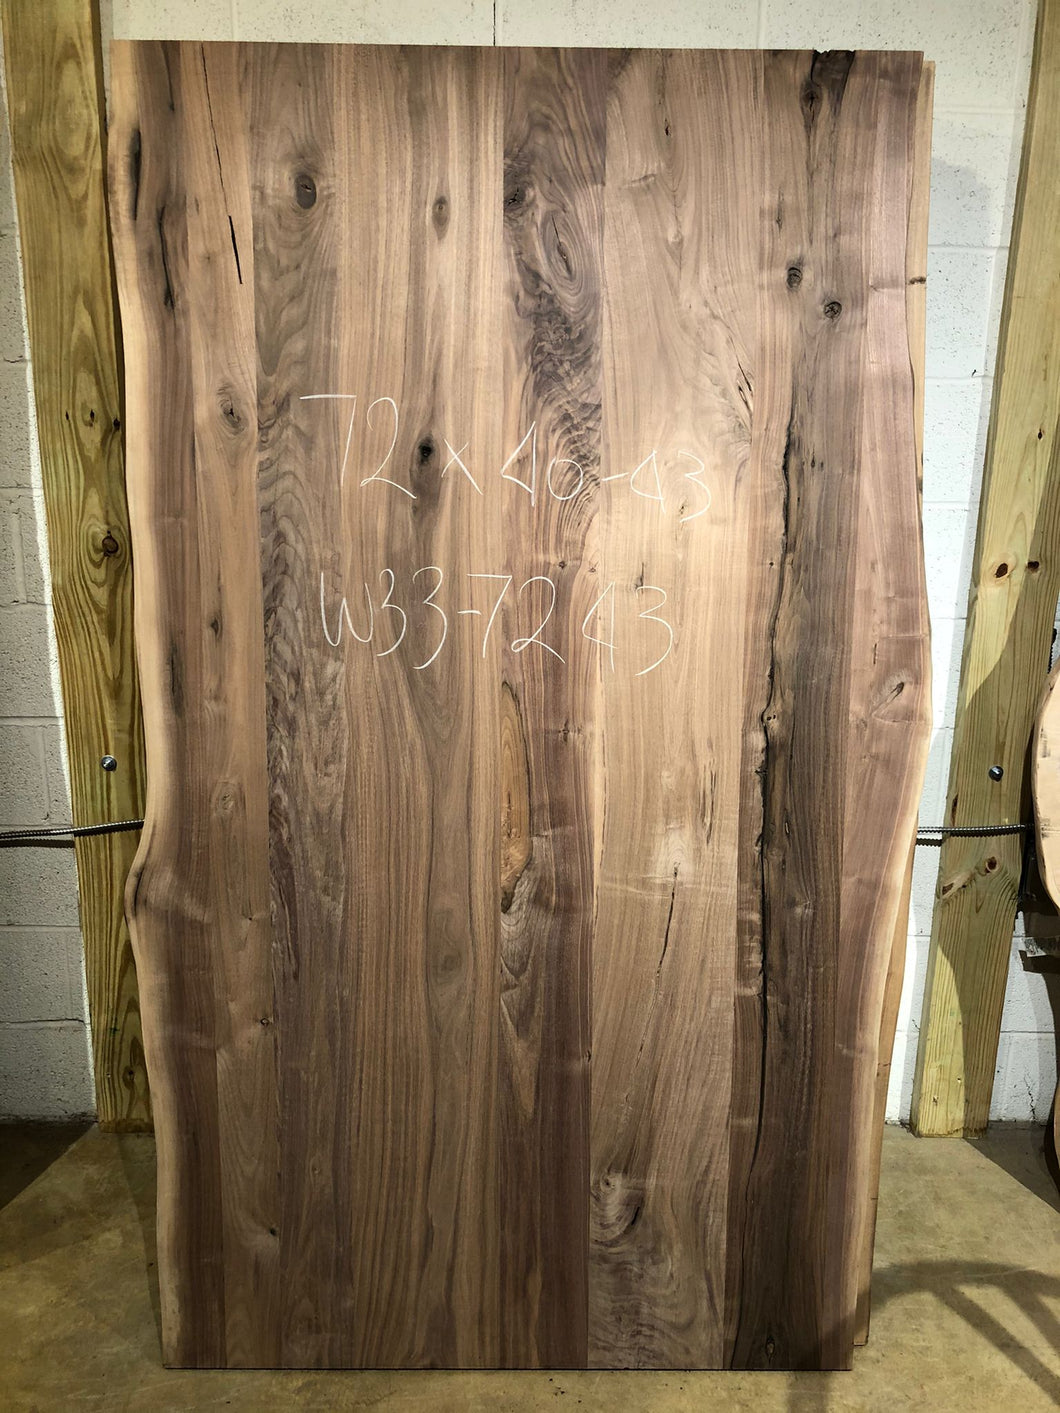 W33-7243 Live edge walnut wood dining table top 72x43